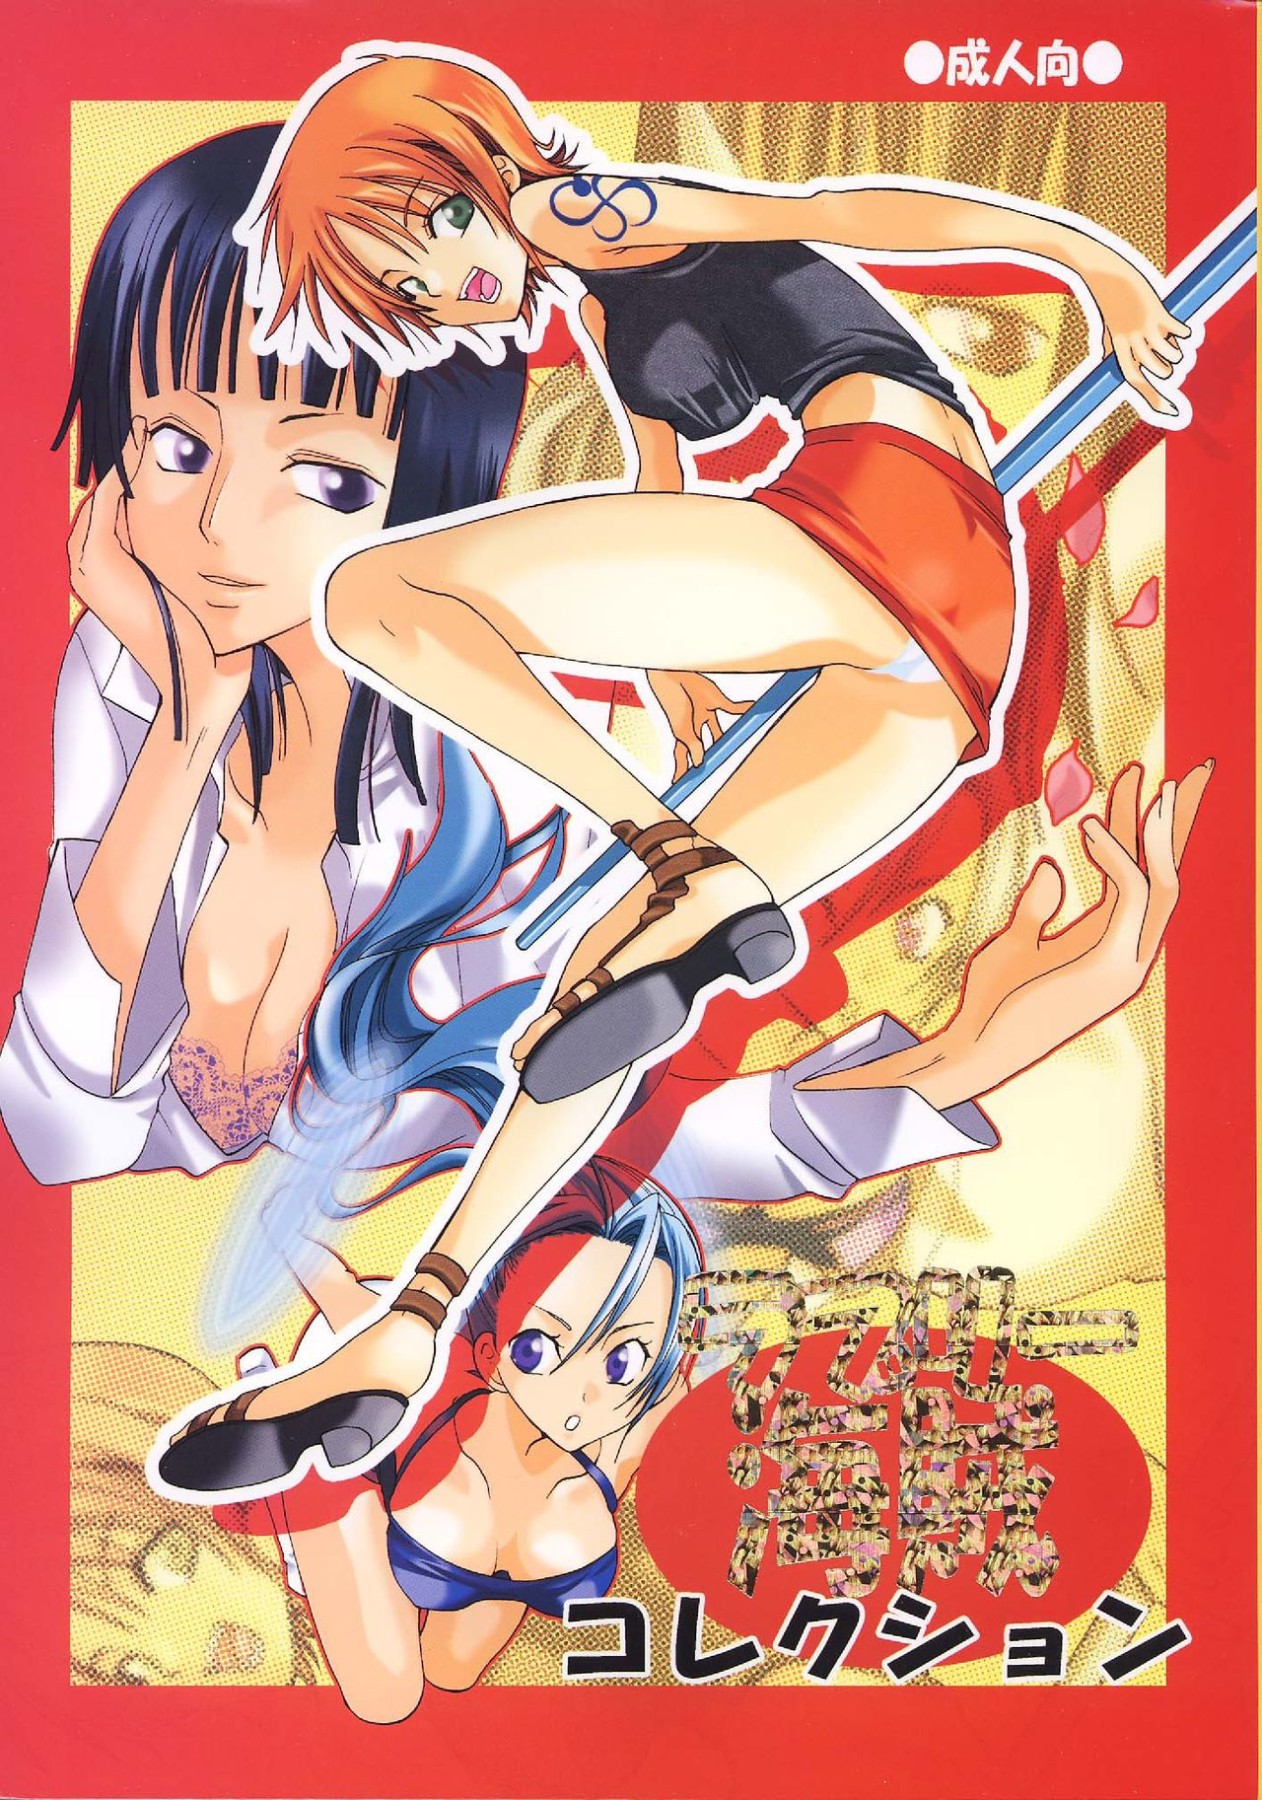 Hentai Manga Comic-v22m-Shiawase PUNCH! 1, 2 and 3-Read-1